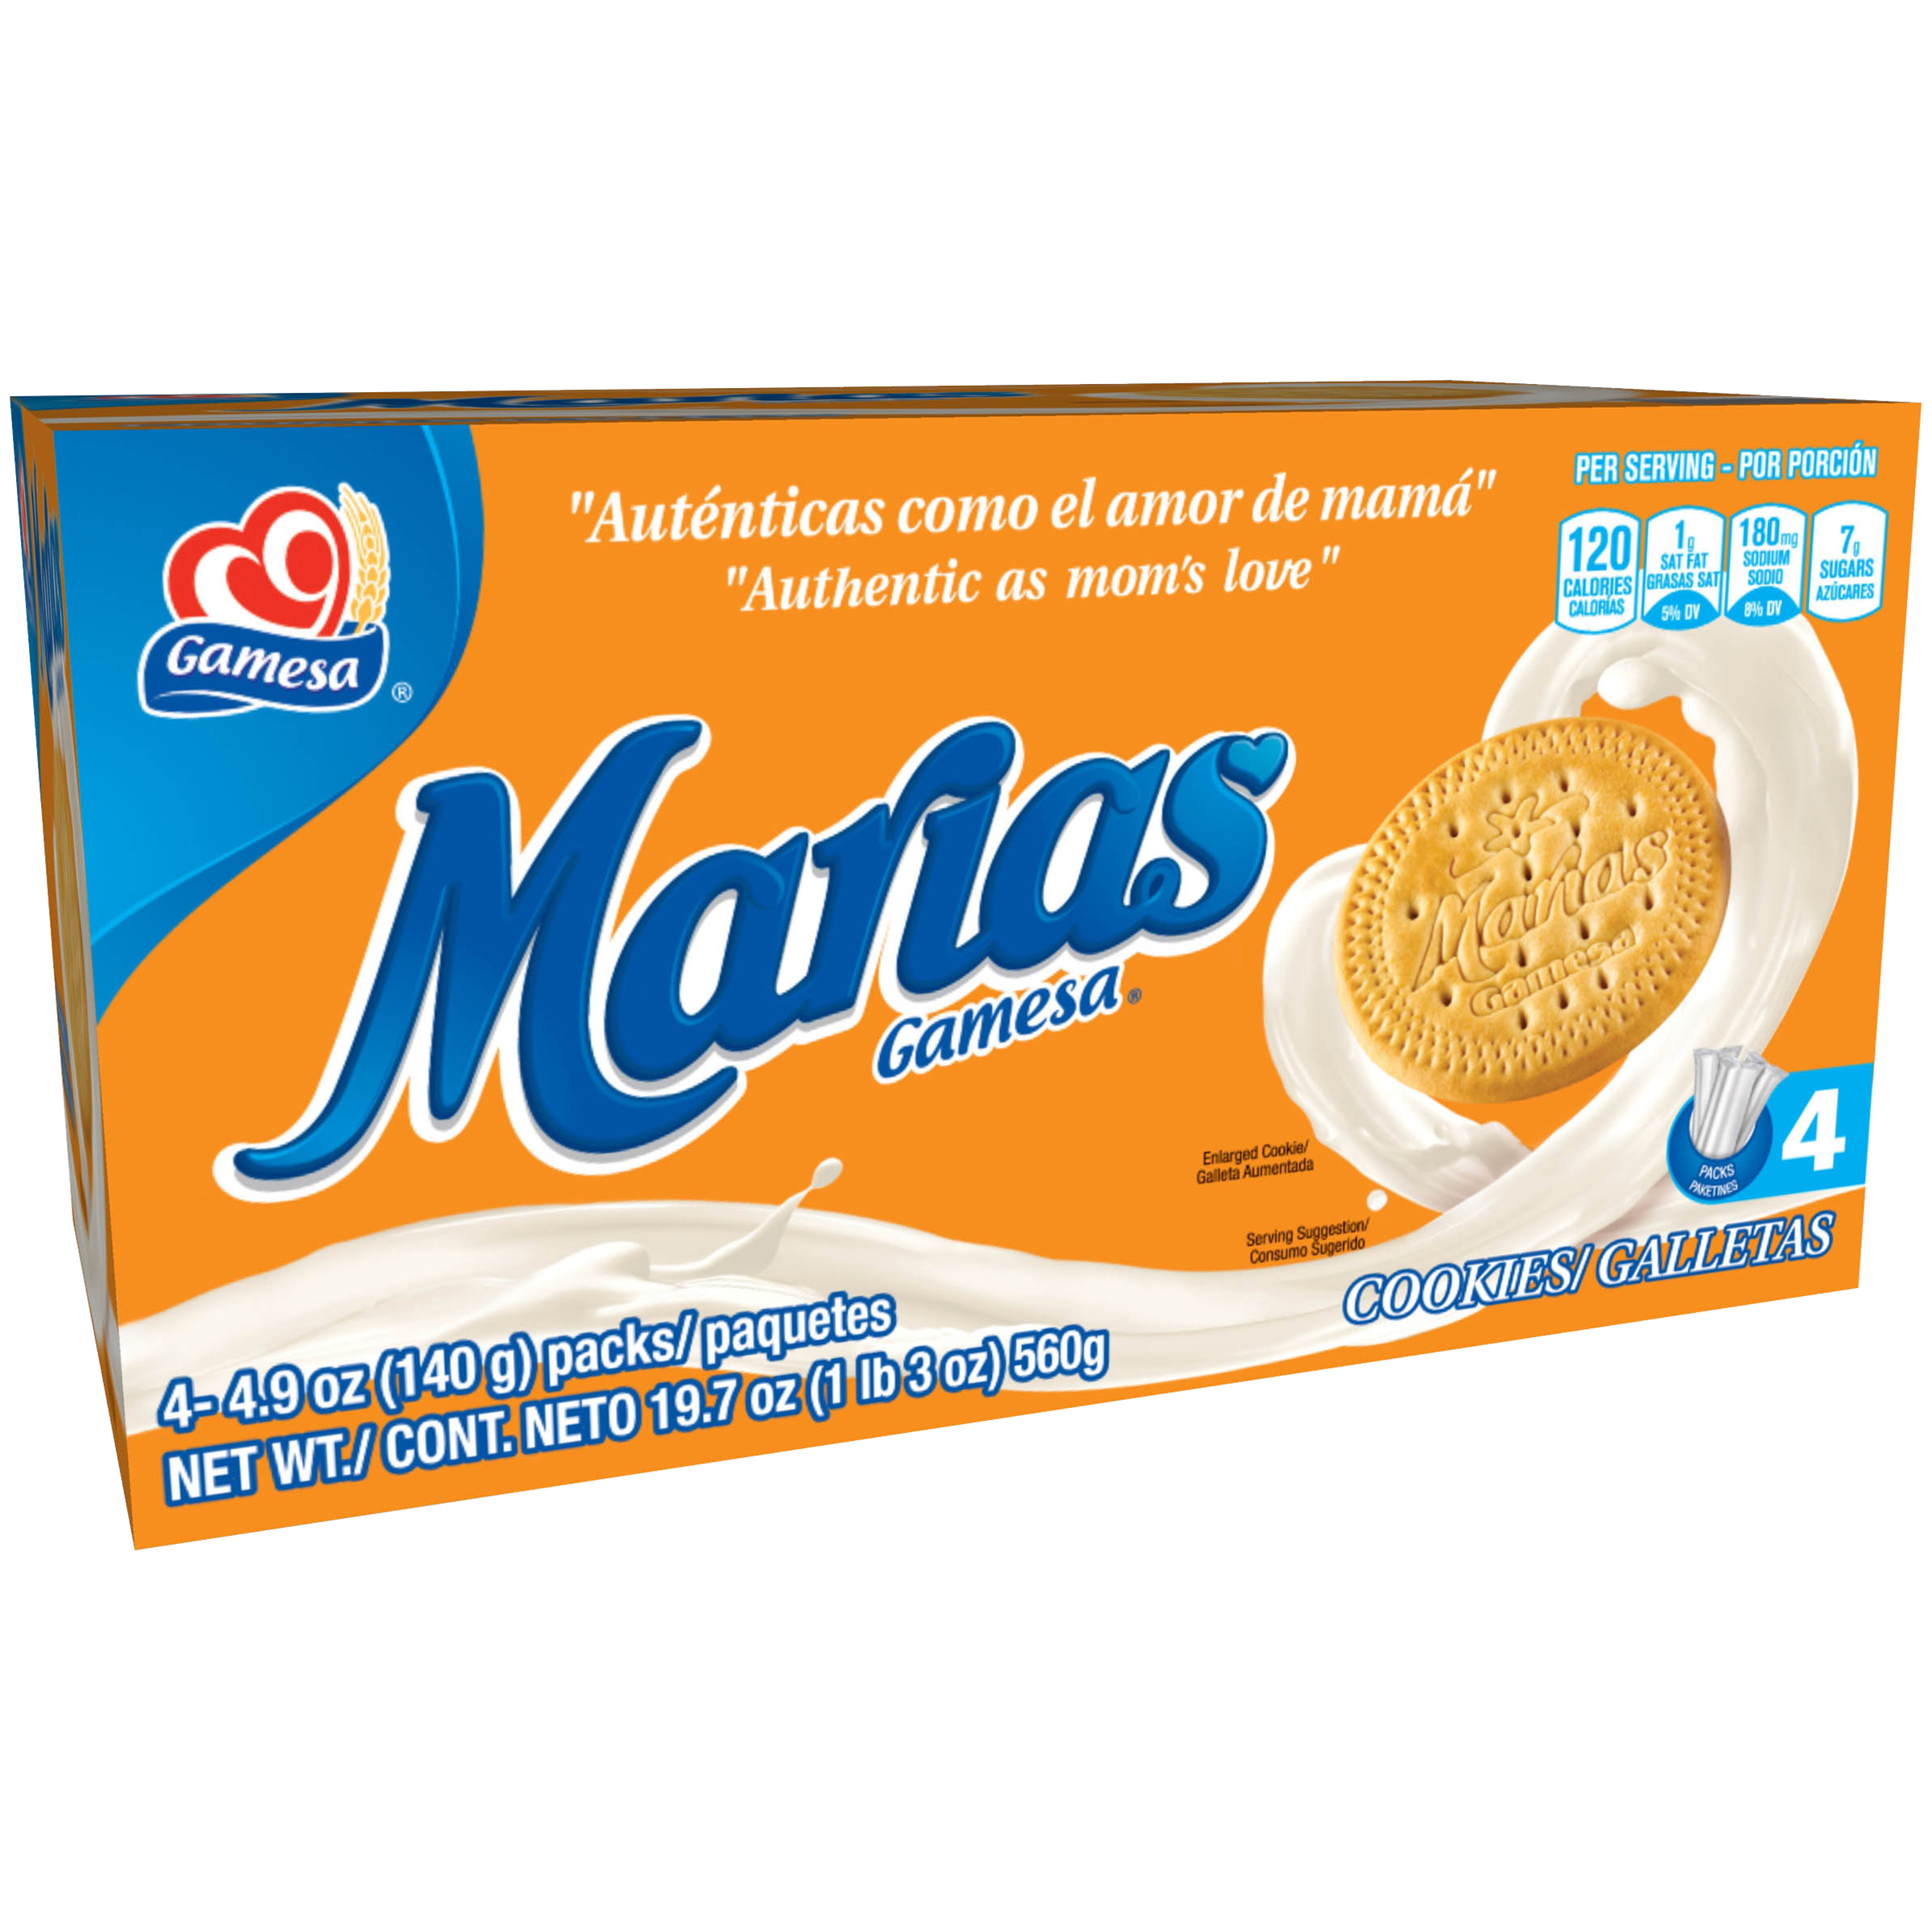 Gamesa Marias Cookies, 4 packs [19.75 oz (1 lb 3.75 oz) 560 g]